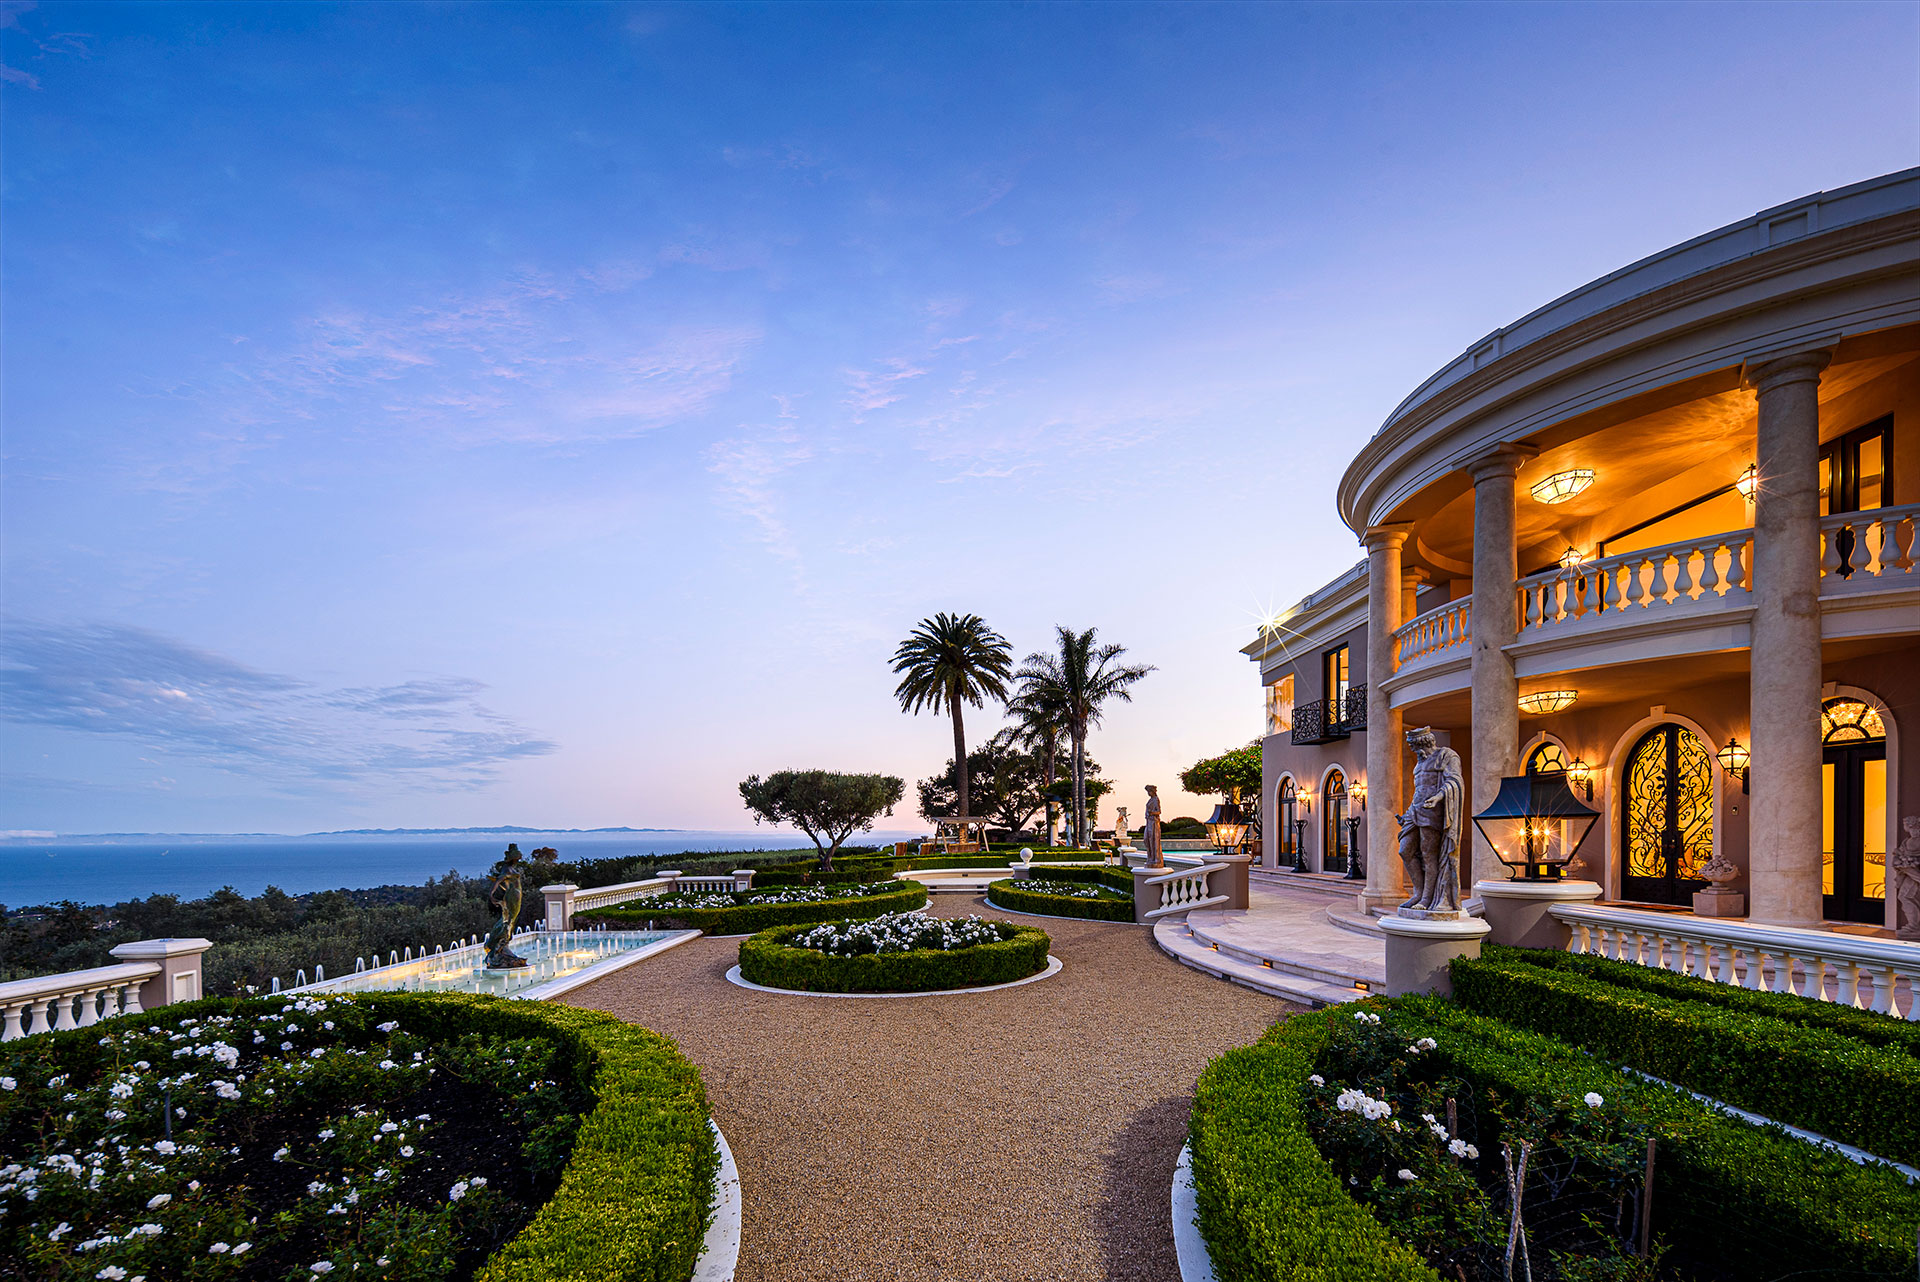 Luxury Property in Montecito, California | 1640 East Mountain Drive, Montecito CA | Franck Abatemarco • Sotheby's International Realty - Montecito - Coast Village Road Brokerage | FINEST RESIDENCES